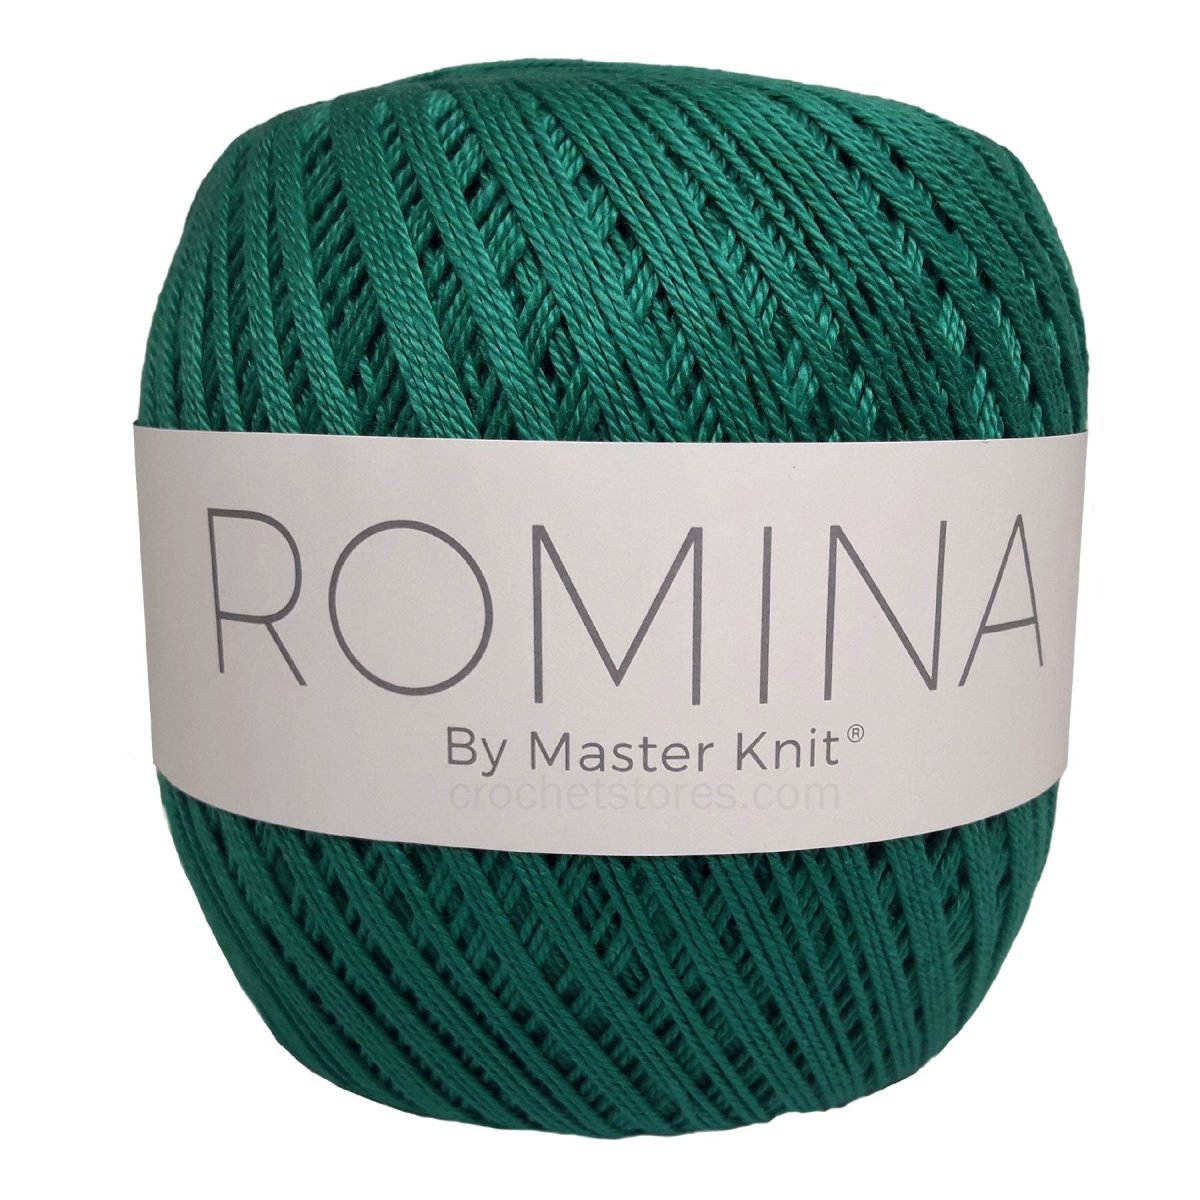 ROMINA - Crochetstores9335-439745051438654